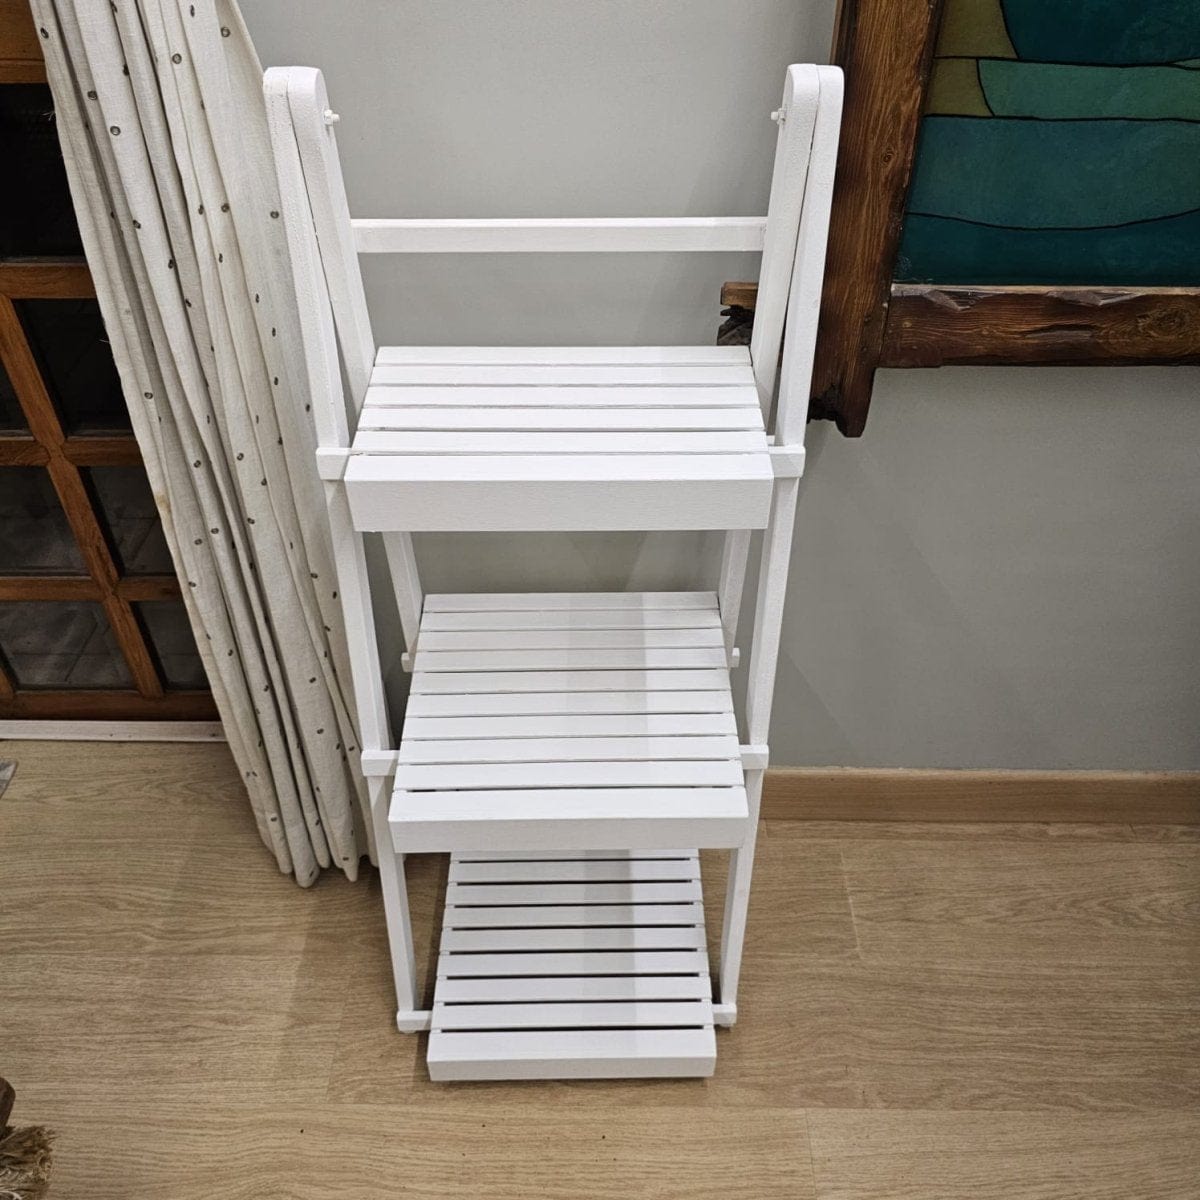 Barish Multi-purpose Floor Standing Stand (Medium) Best Home Decor Handcrafted